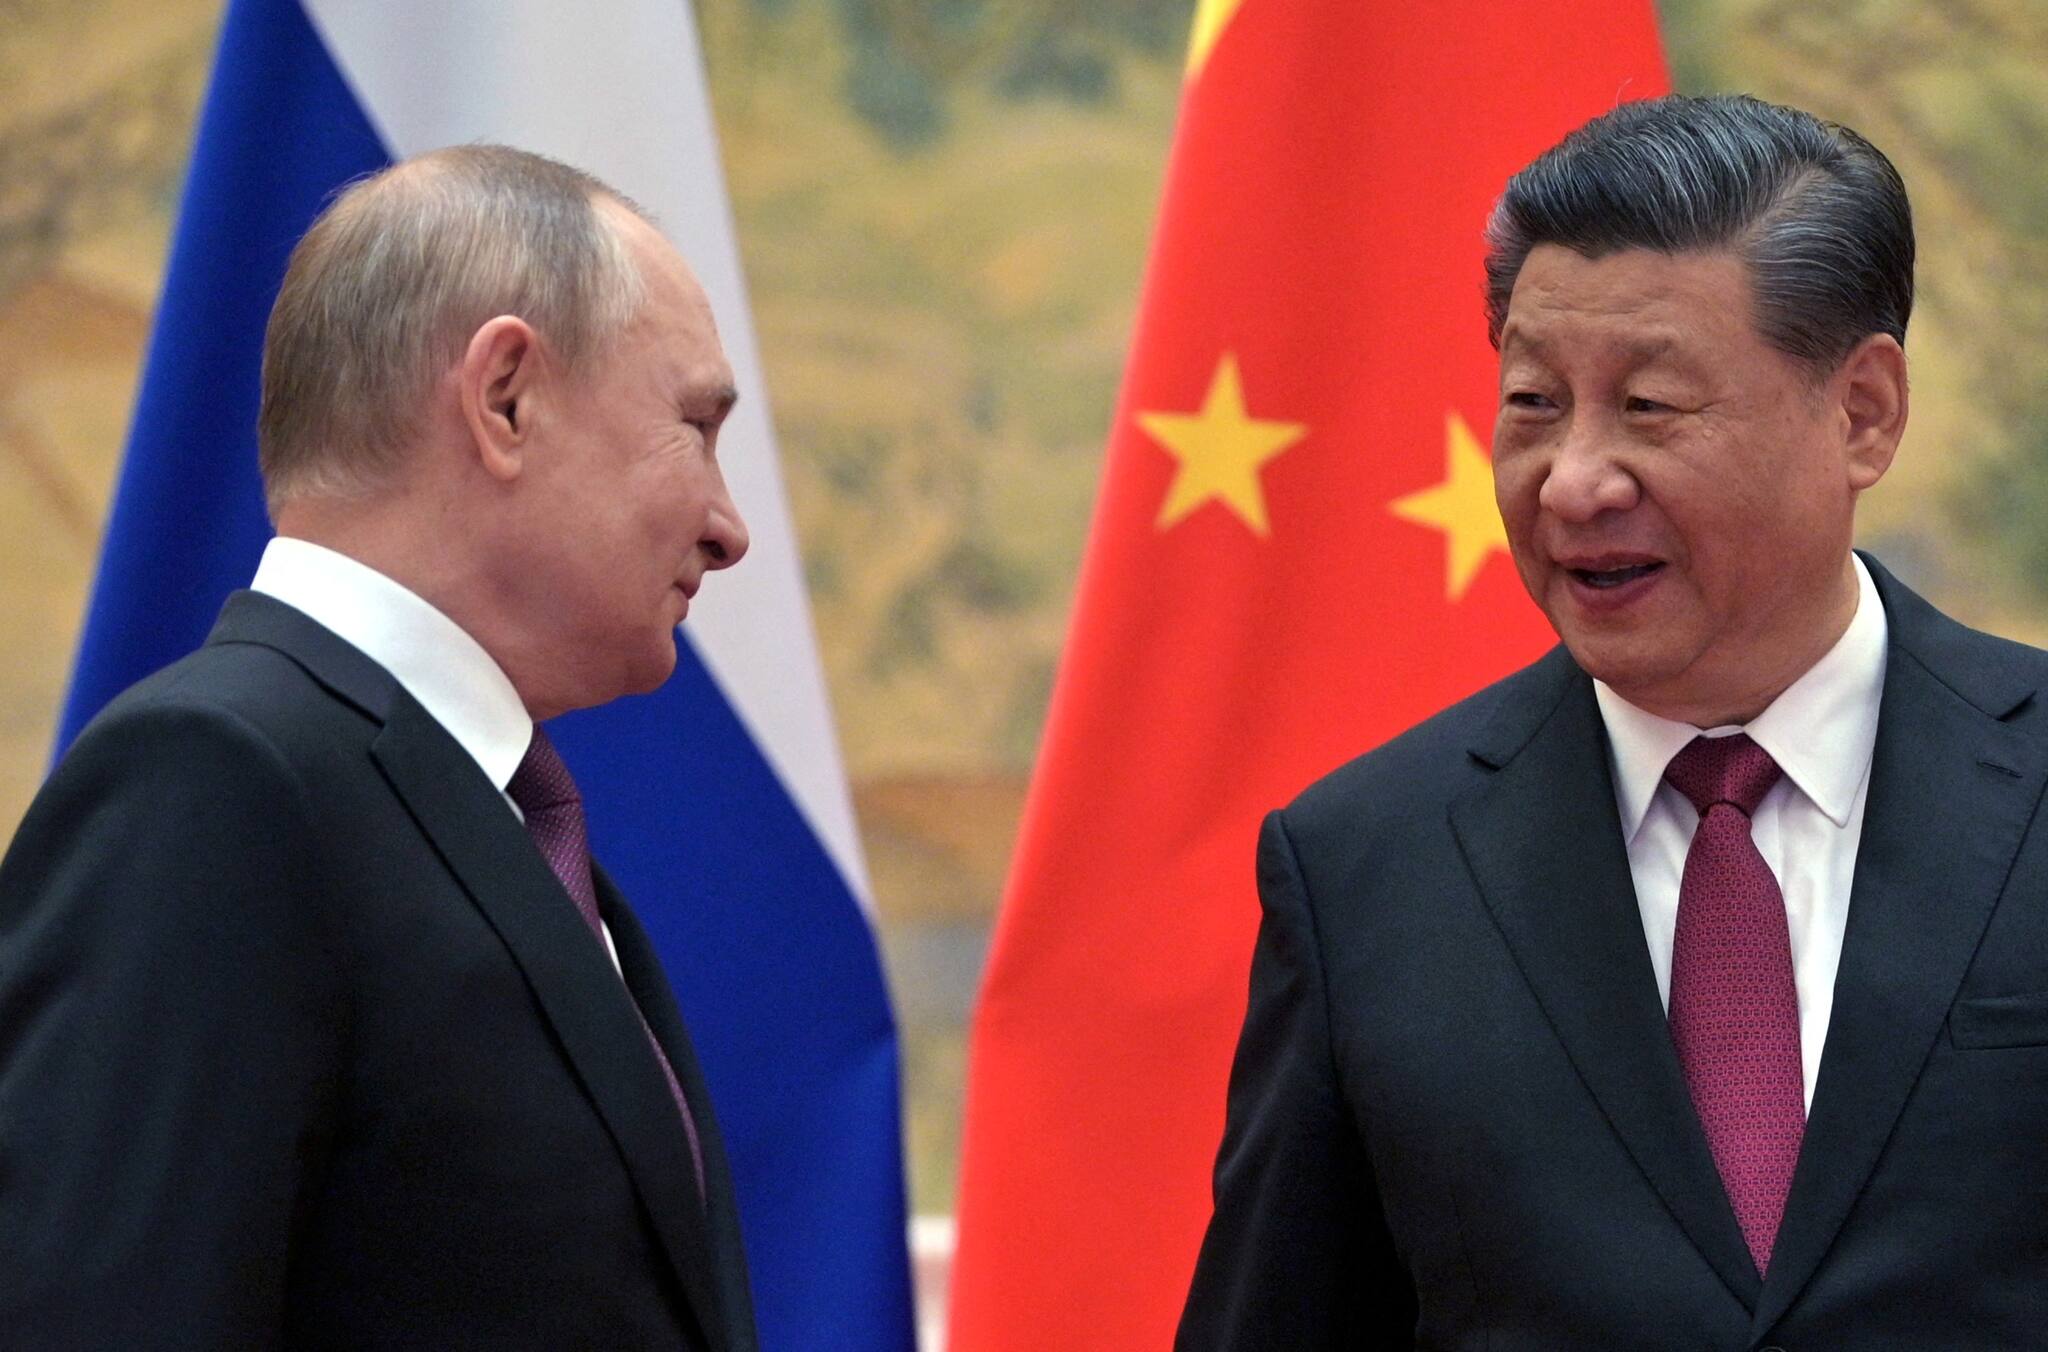 India to resist anti-US messaging at BRICS summit with Xi Jinping, Vladimir Putin